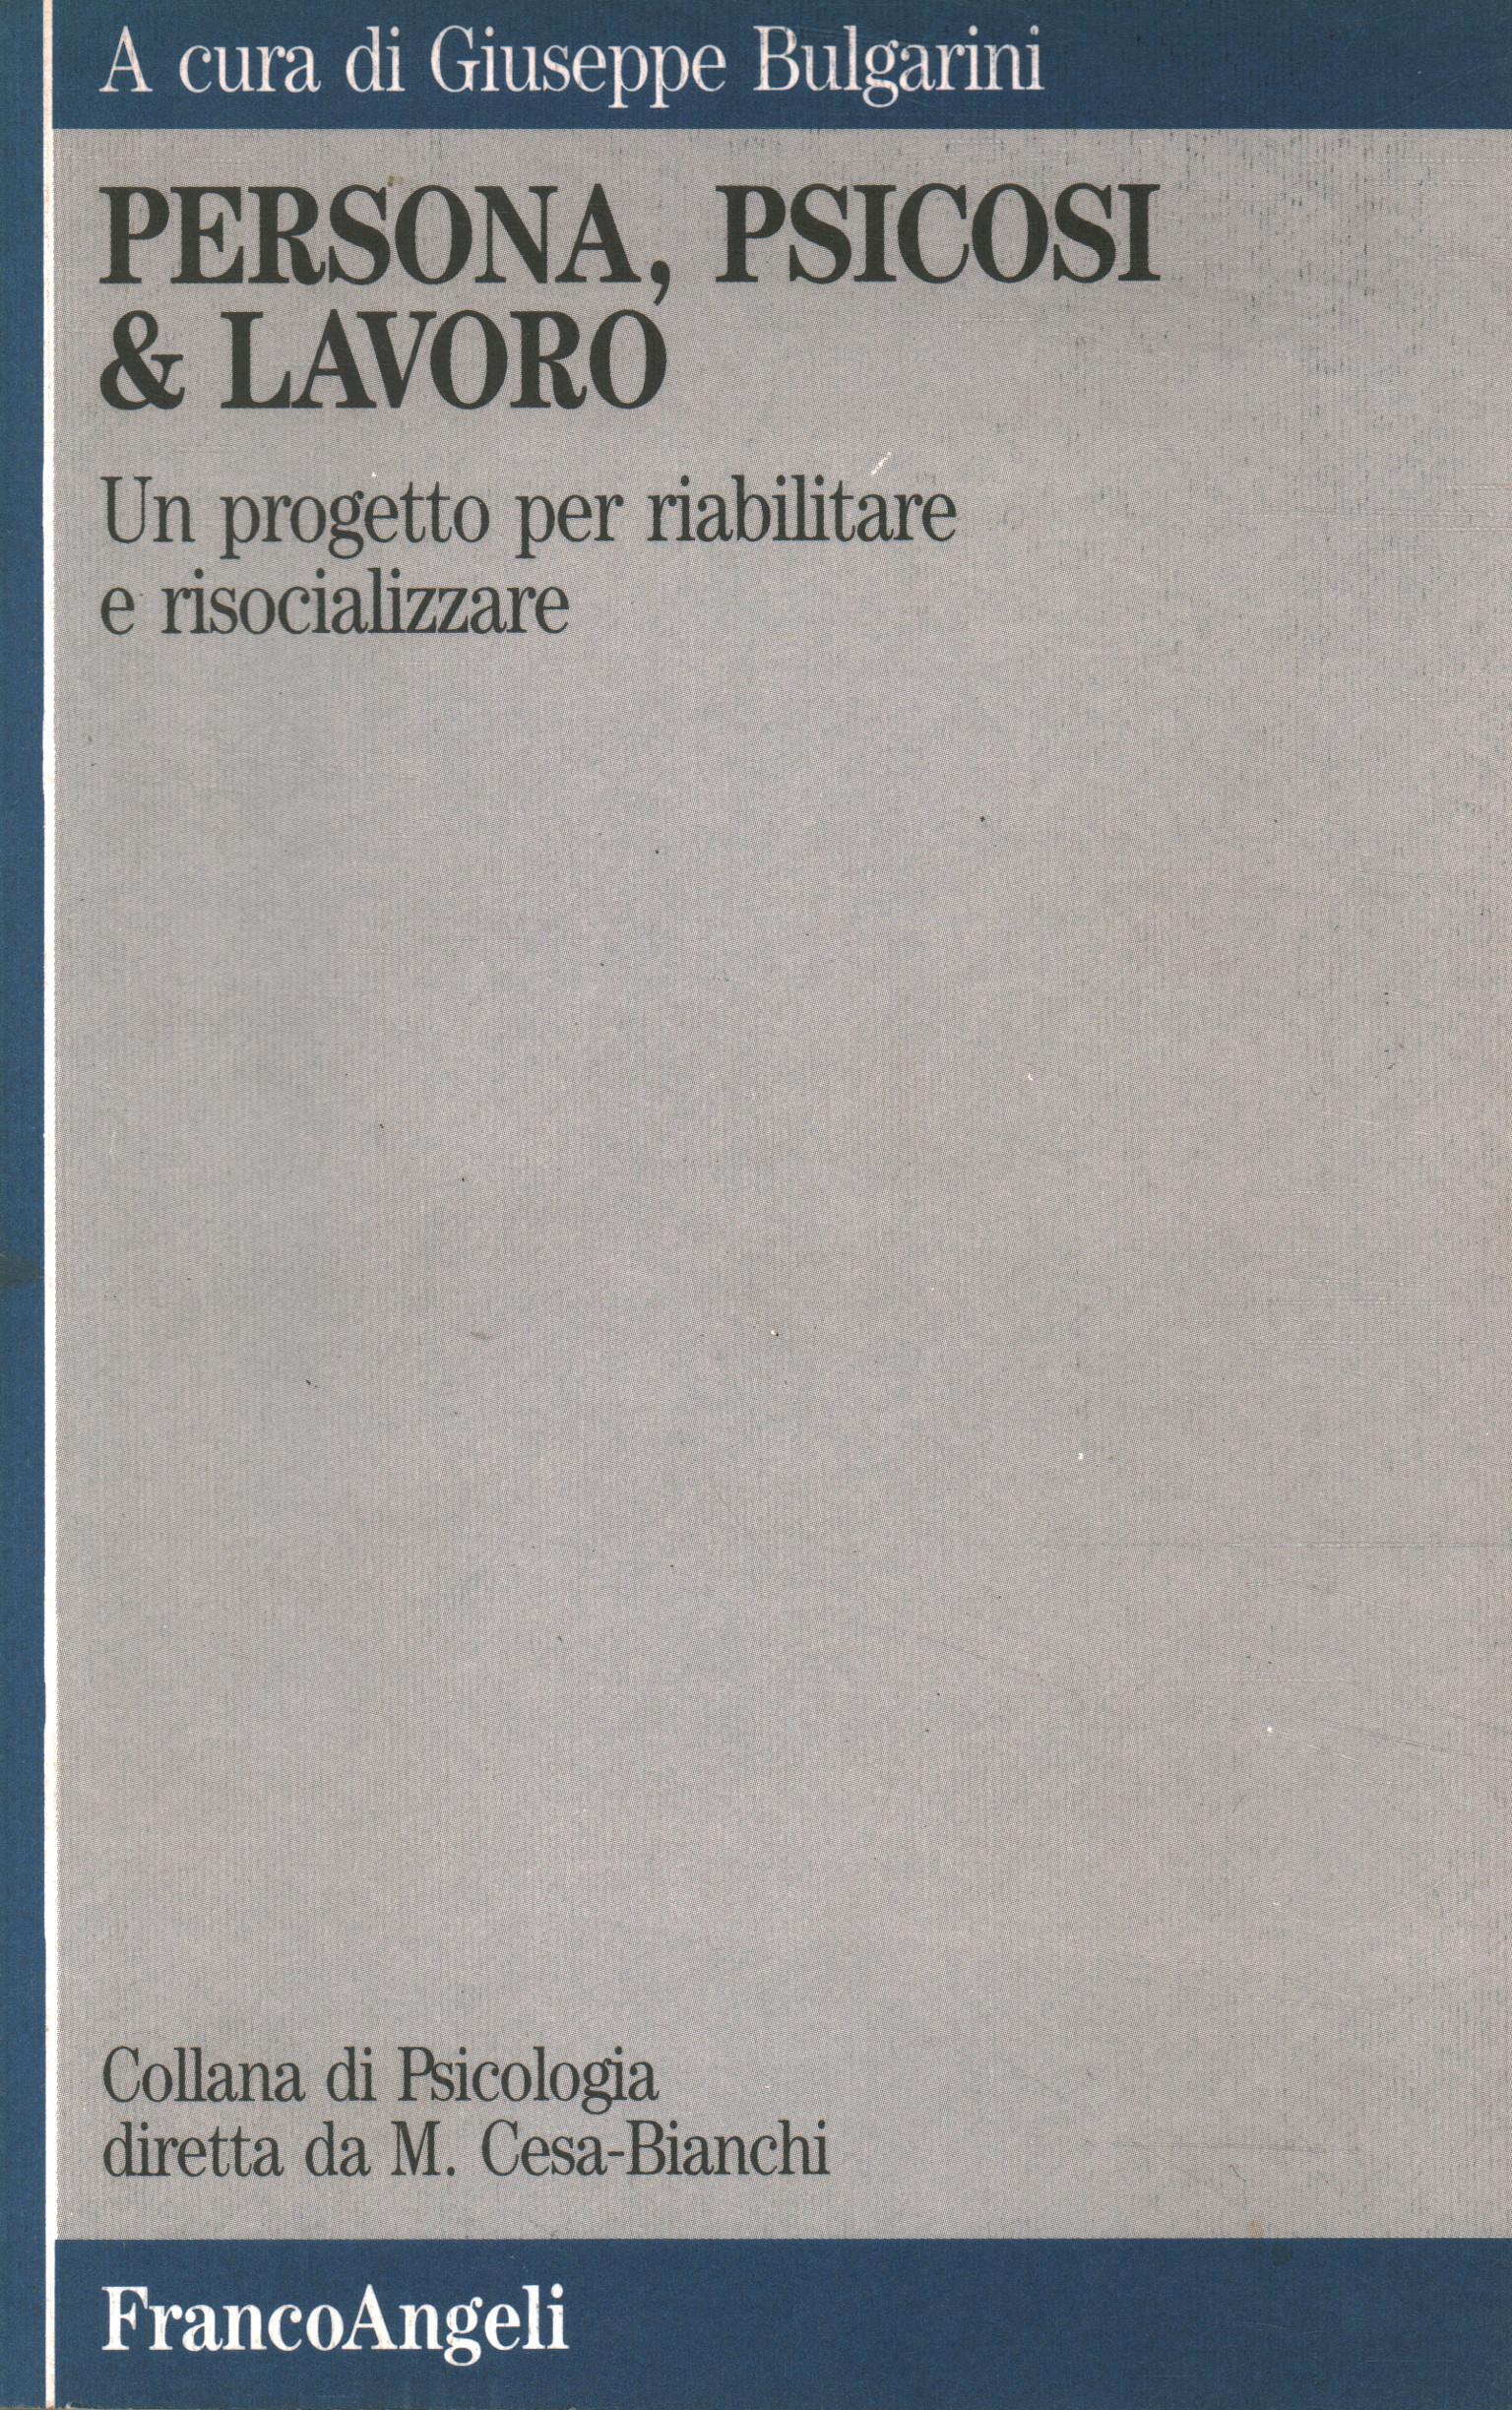 Persona, psicosis y trabajo, Giuseppe Bulgarini